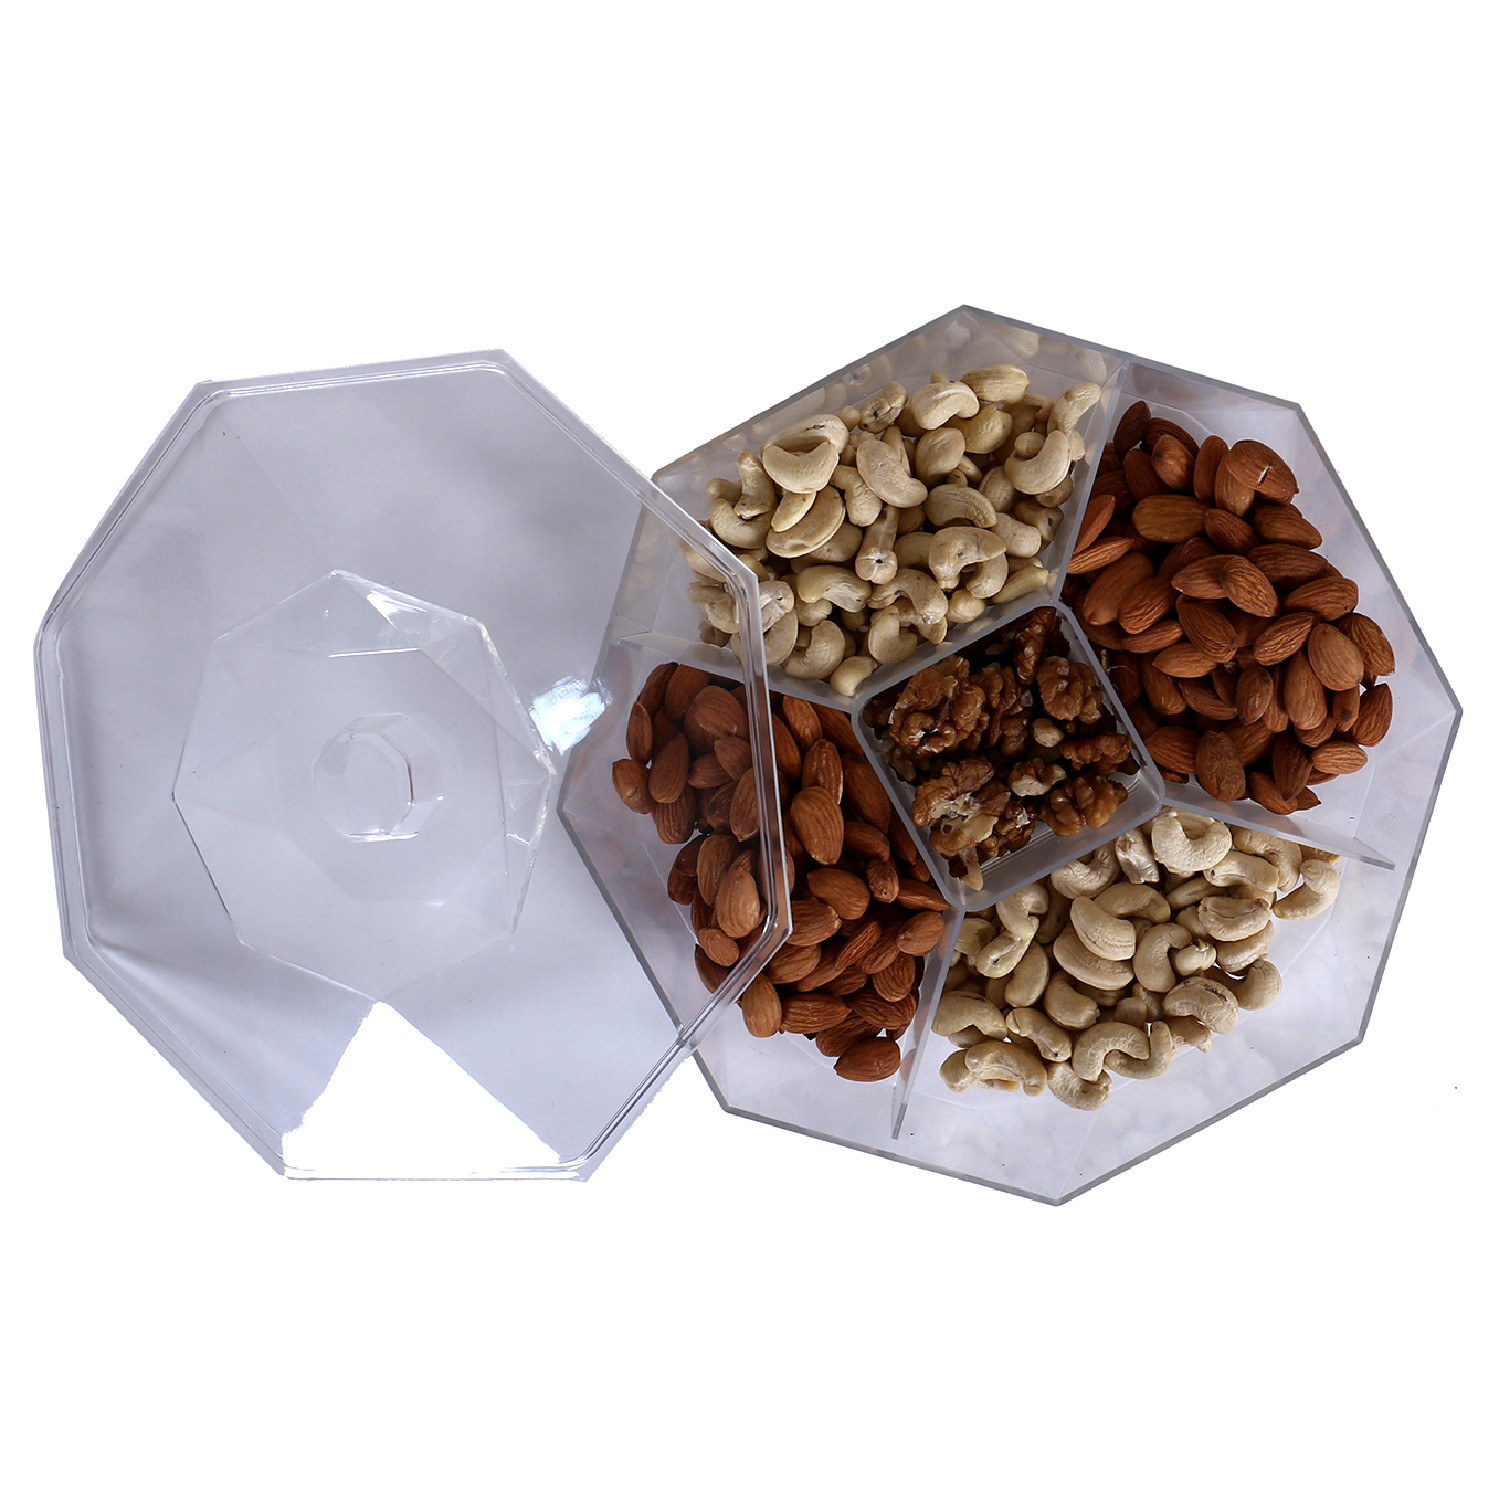 Kuber Industries 5 CompartMant Dry Fruit Jar|Octagon Shape Plastic Snackers,Cookies,Nuts Glass Jar|Masala,Grains & Kitchen Jar (White)